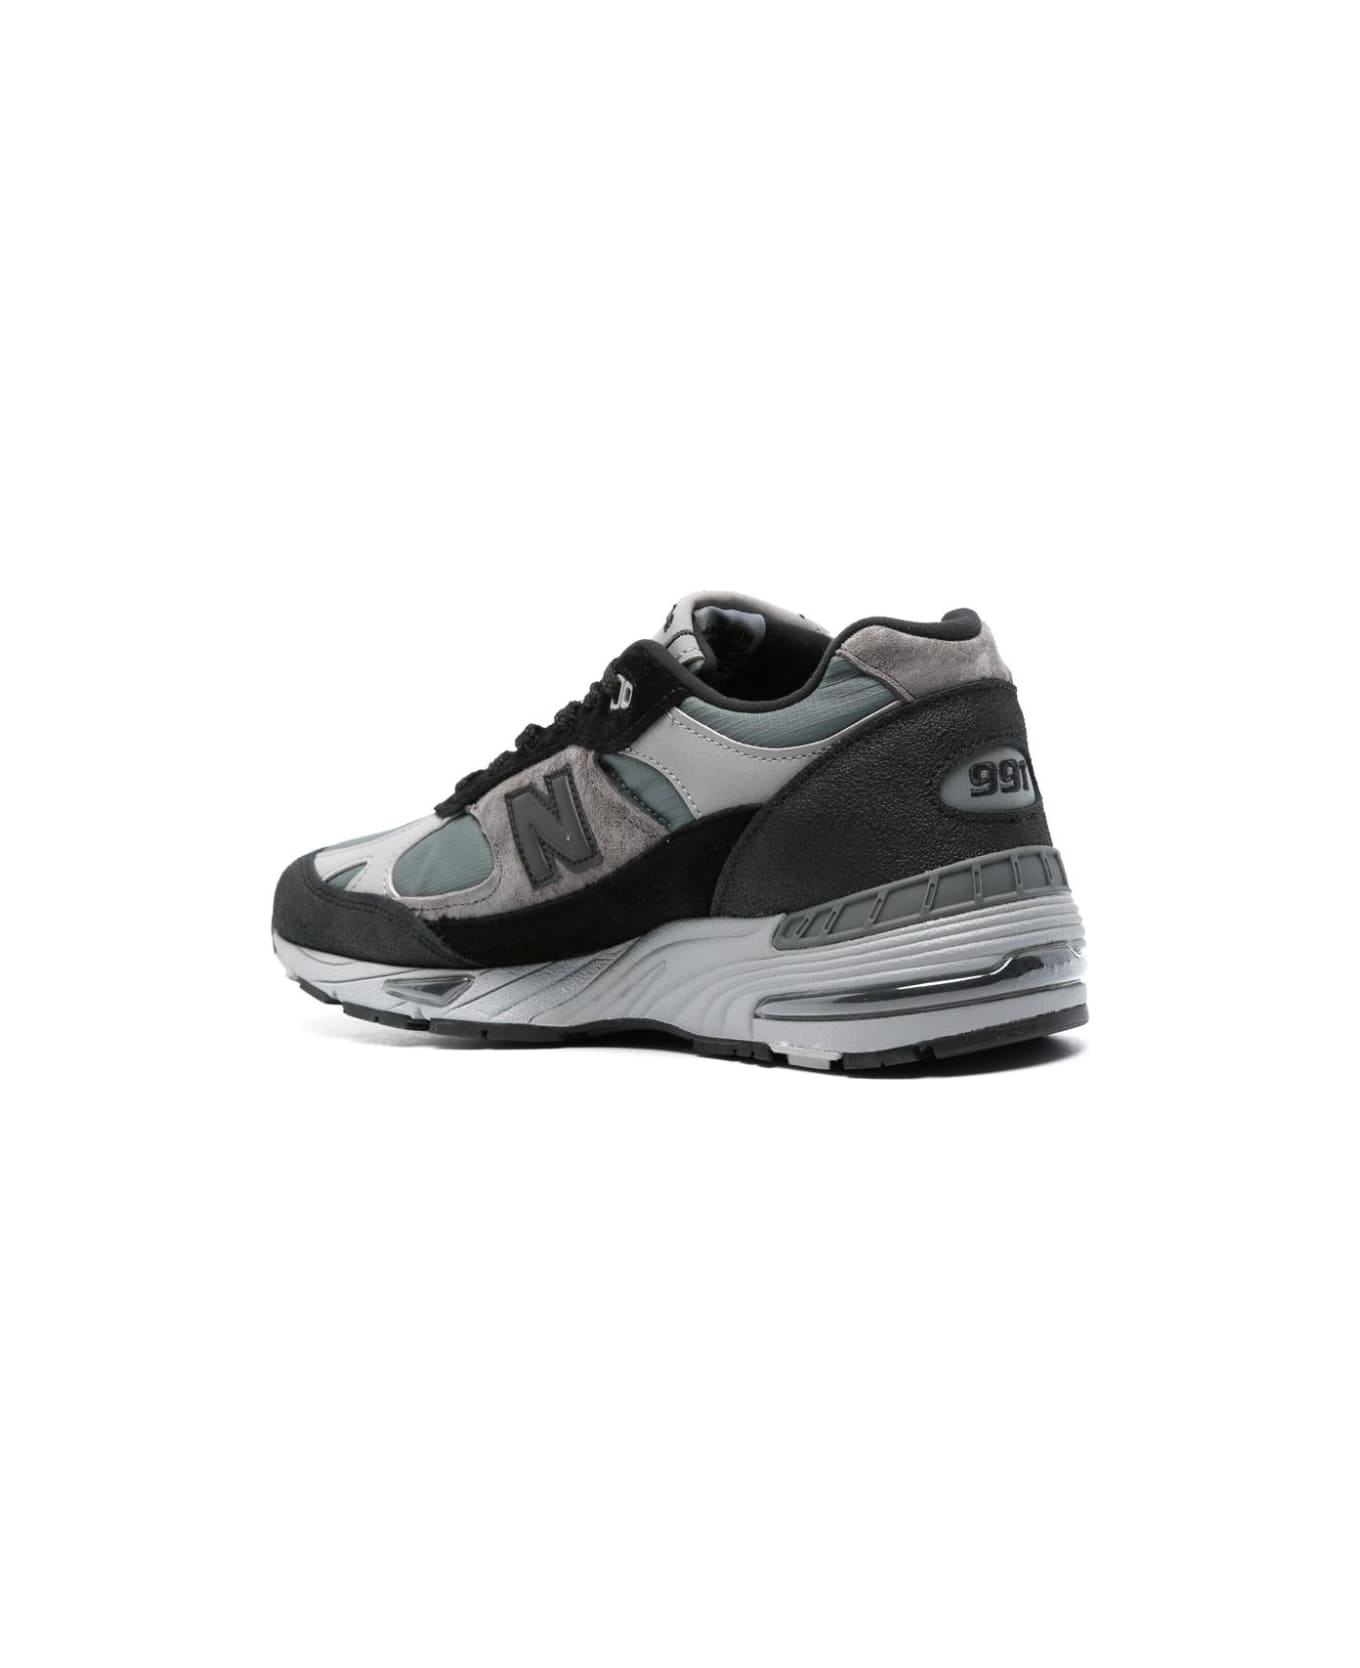 New Balance 991 Lifestyle Sneakers - Black Grey